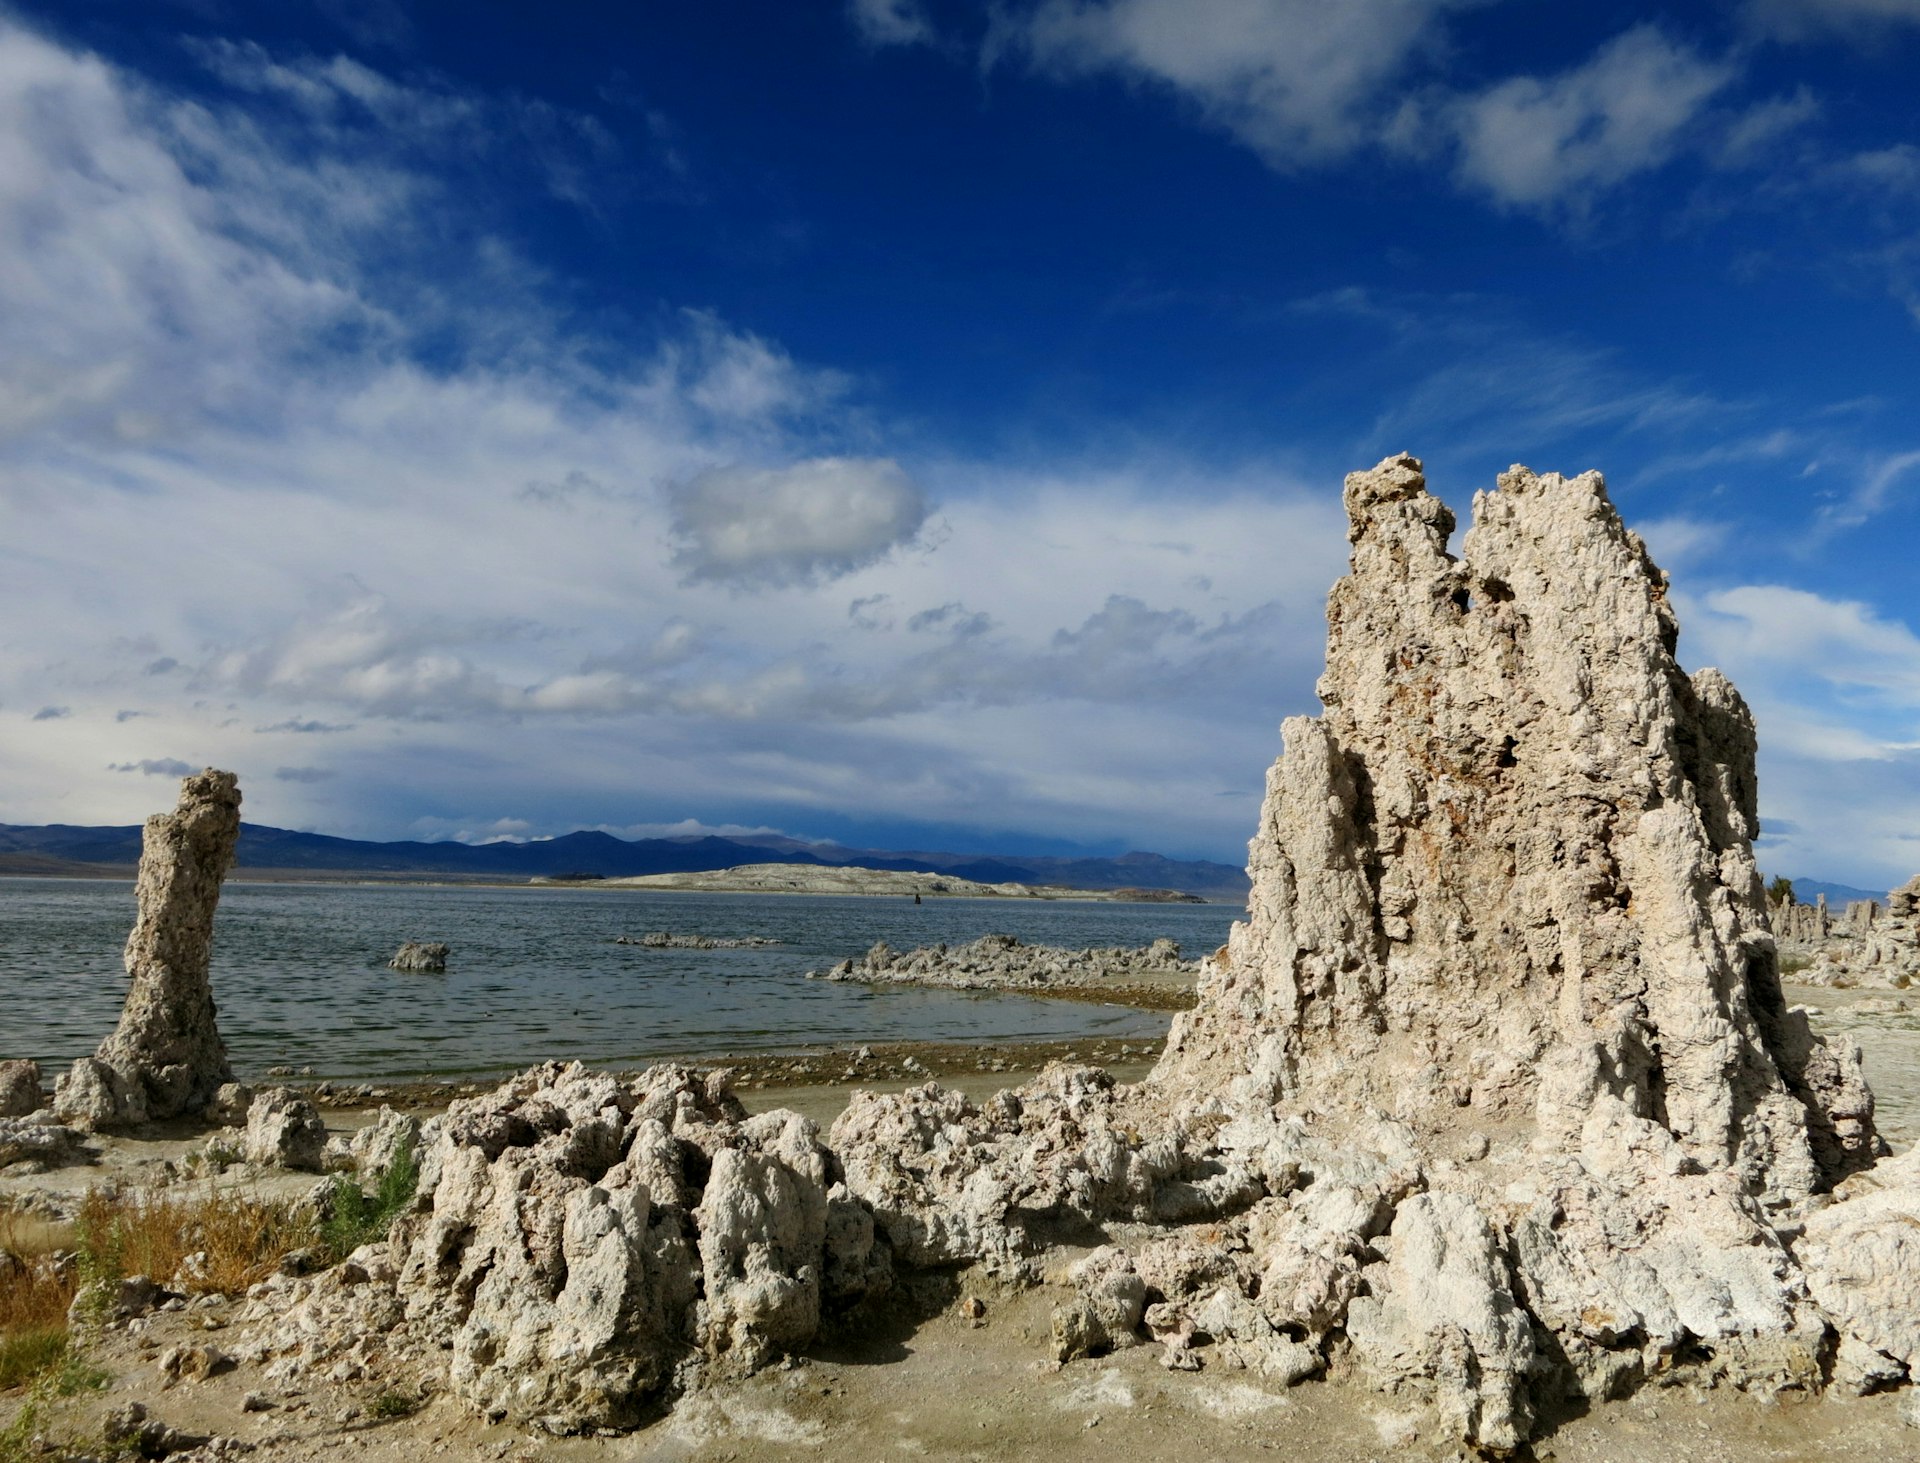 Tufa towers, columns of salt deposits, mark the shoreline of Mono Lake in California